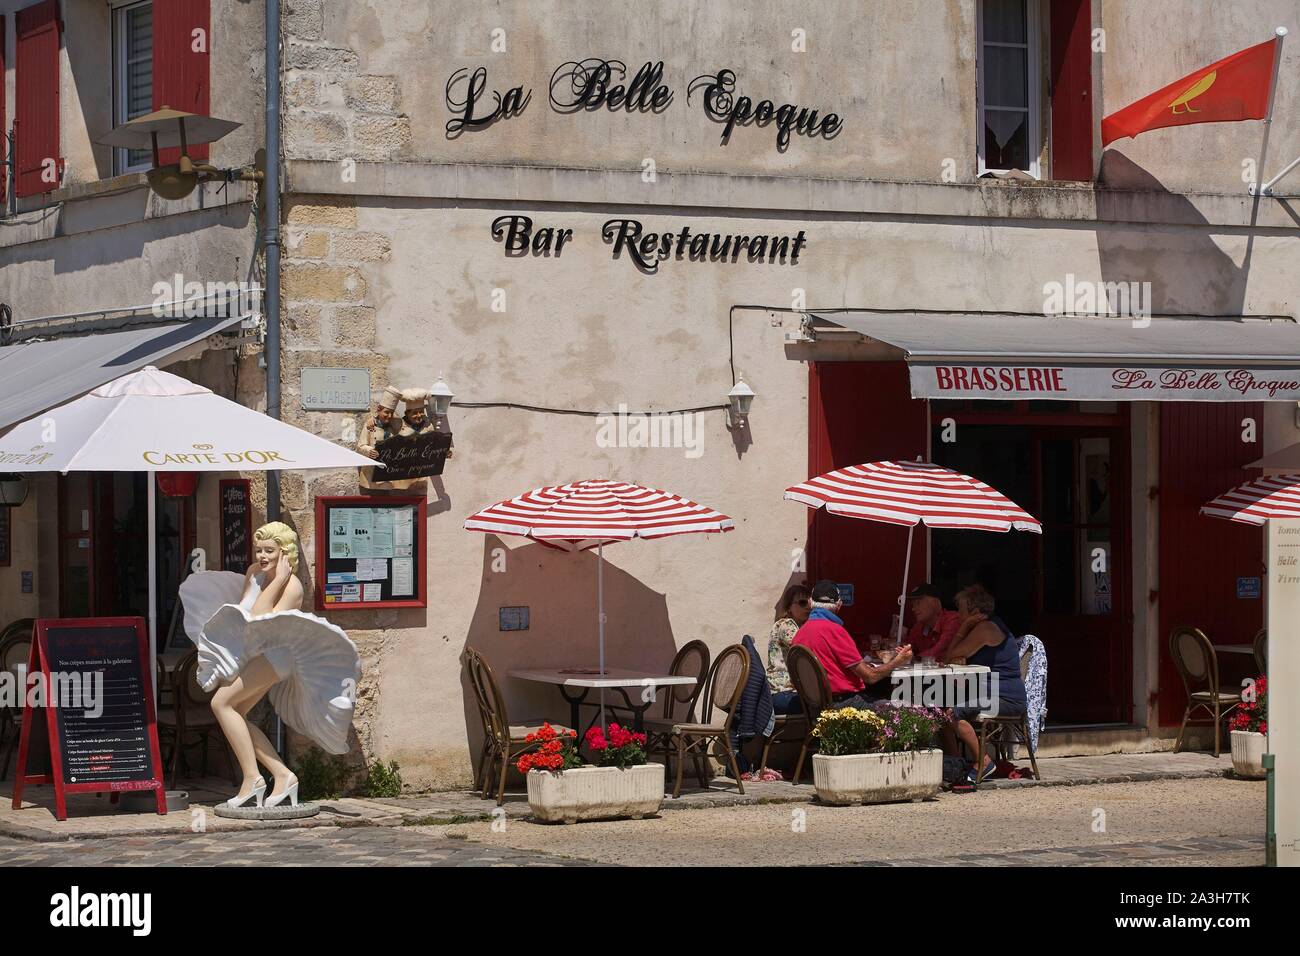 La belle epoque restaurant hi-res stock photography and images - Alamy